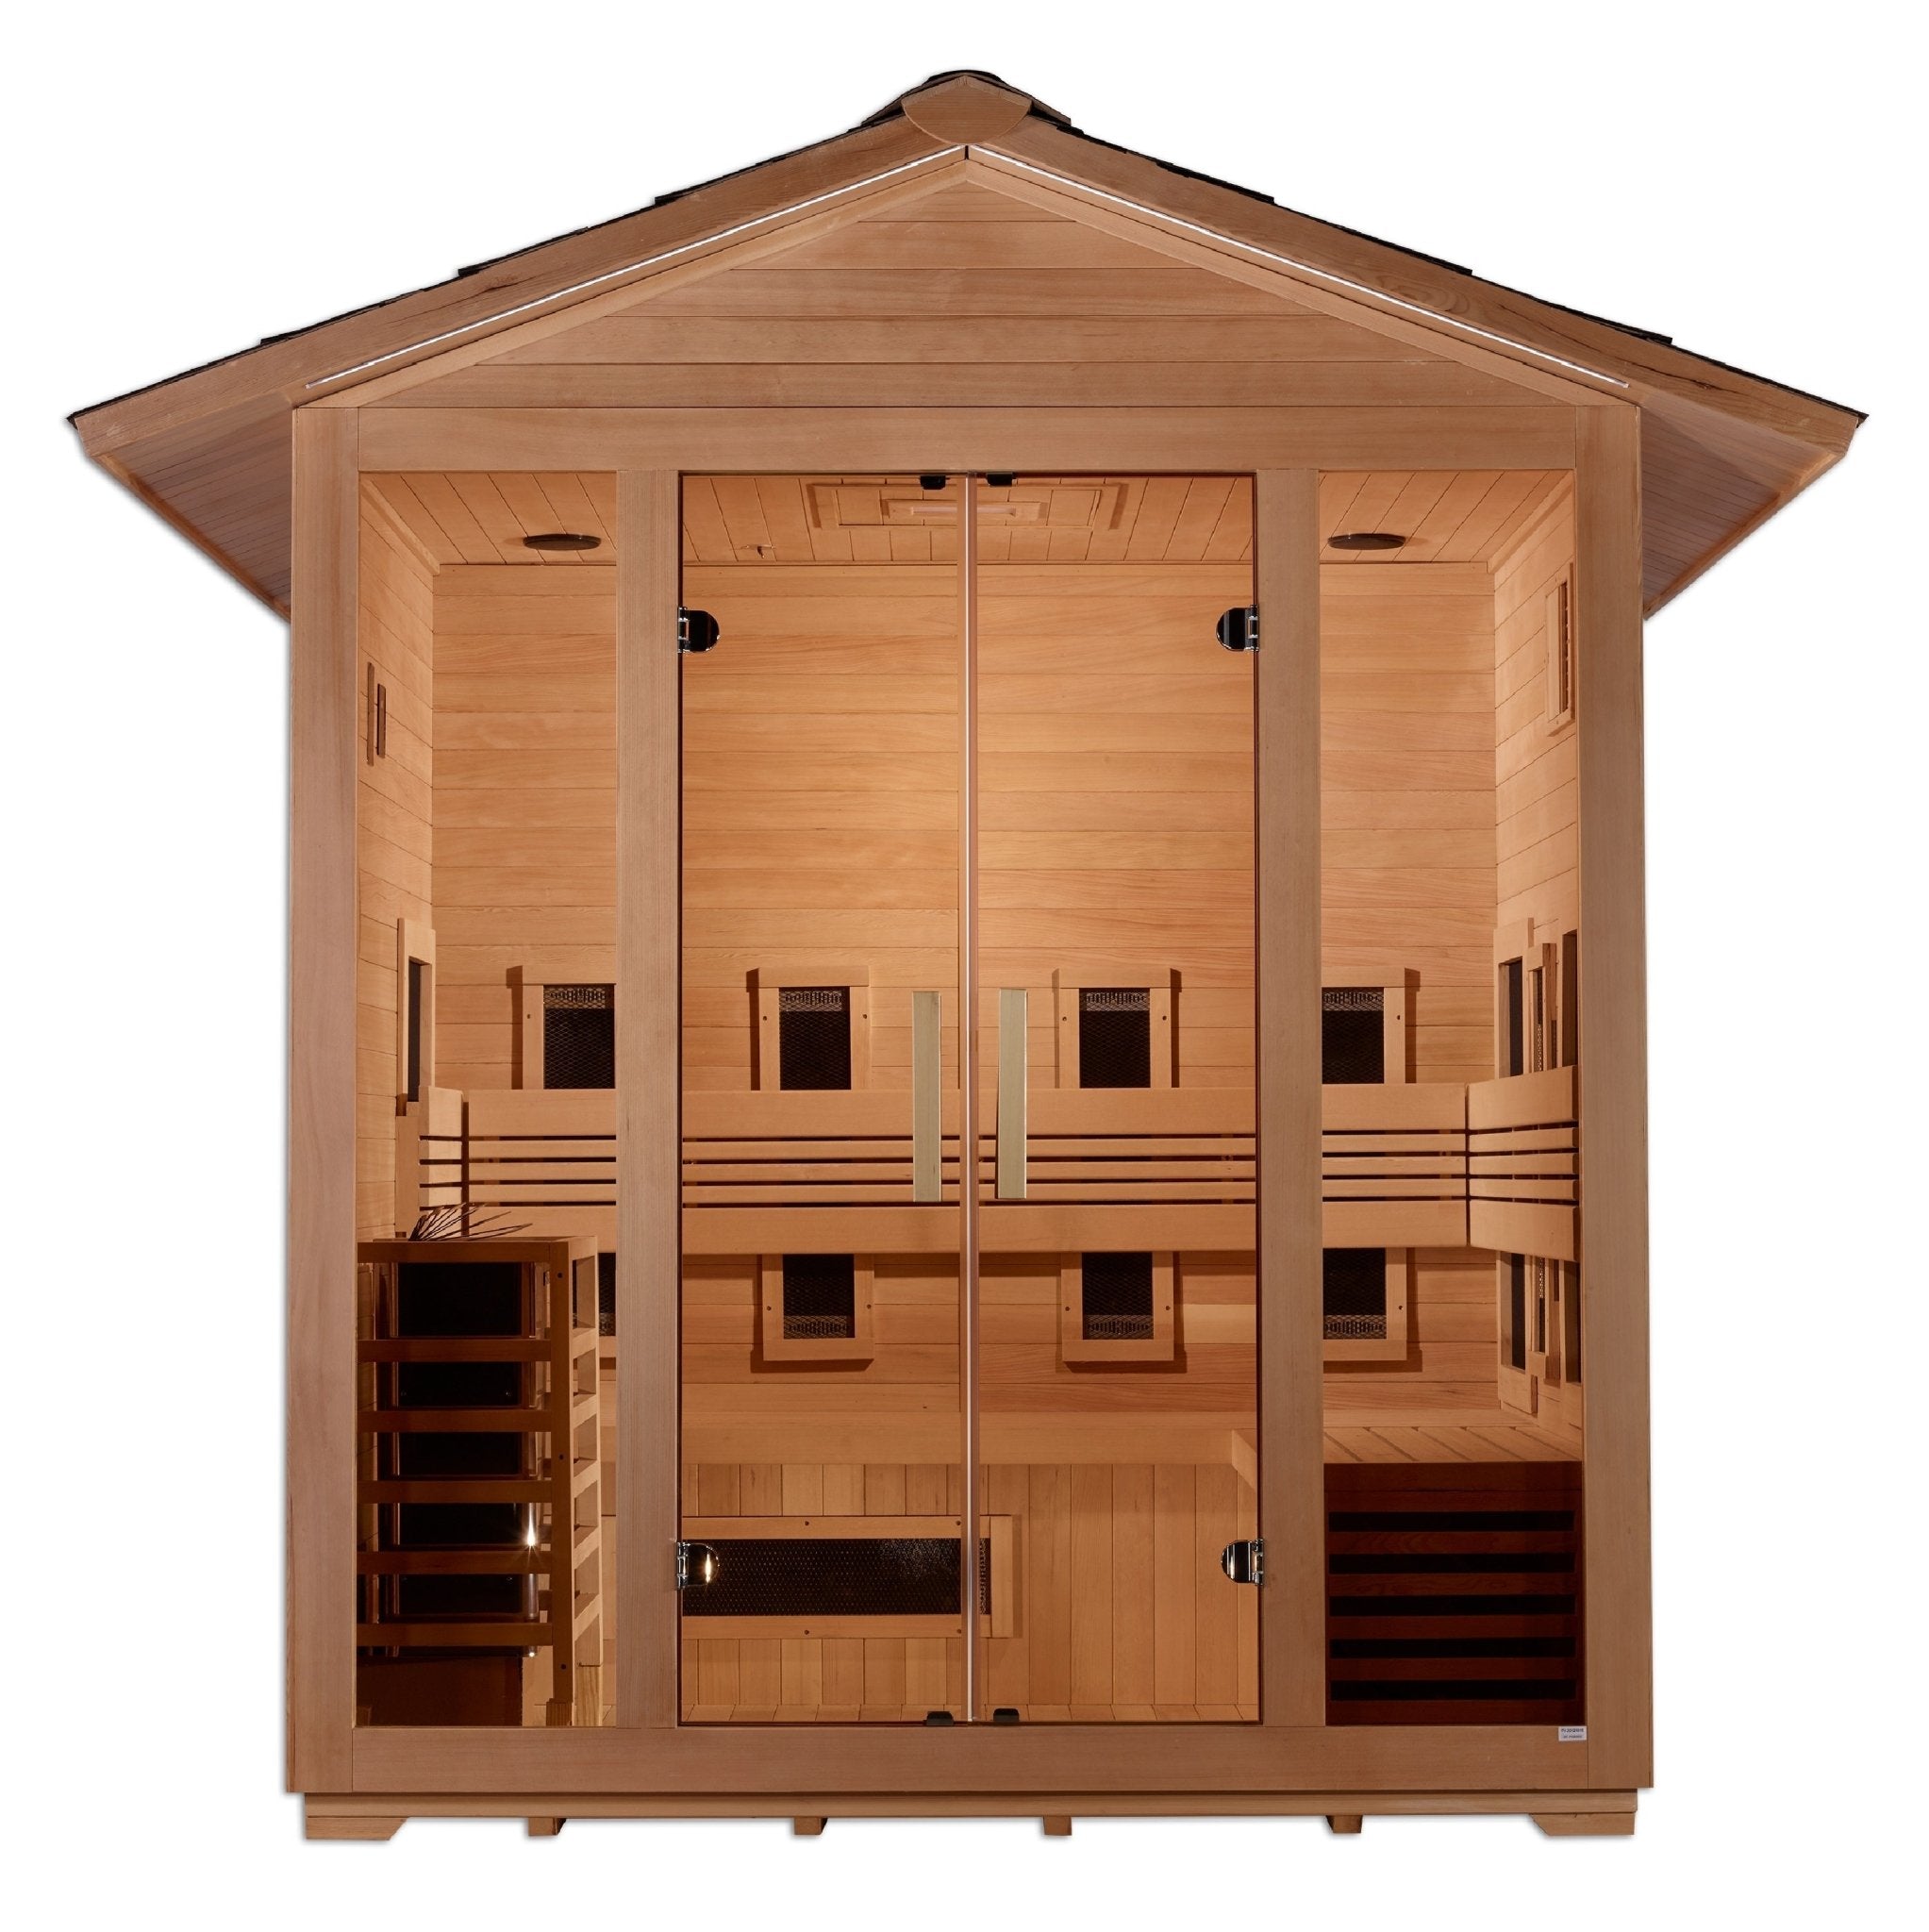 Golden Designs "Gargellen" 5 Person Hybrid (PureTech™ Full Spectrum IR or Traditional Stove) Outdoor Sauna - Canadian Hemlock - The Sauna World